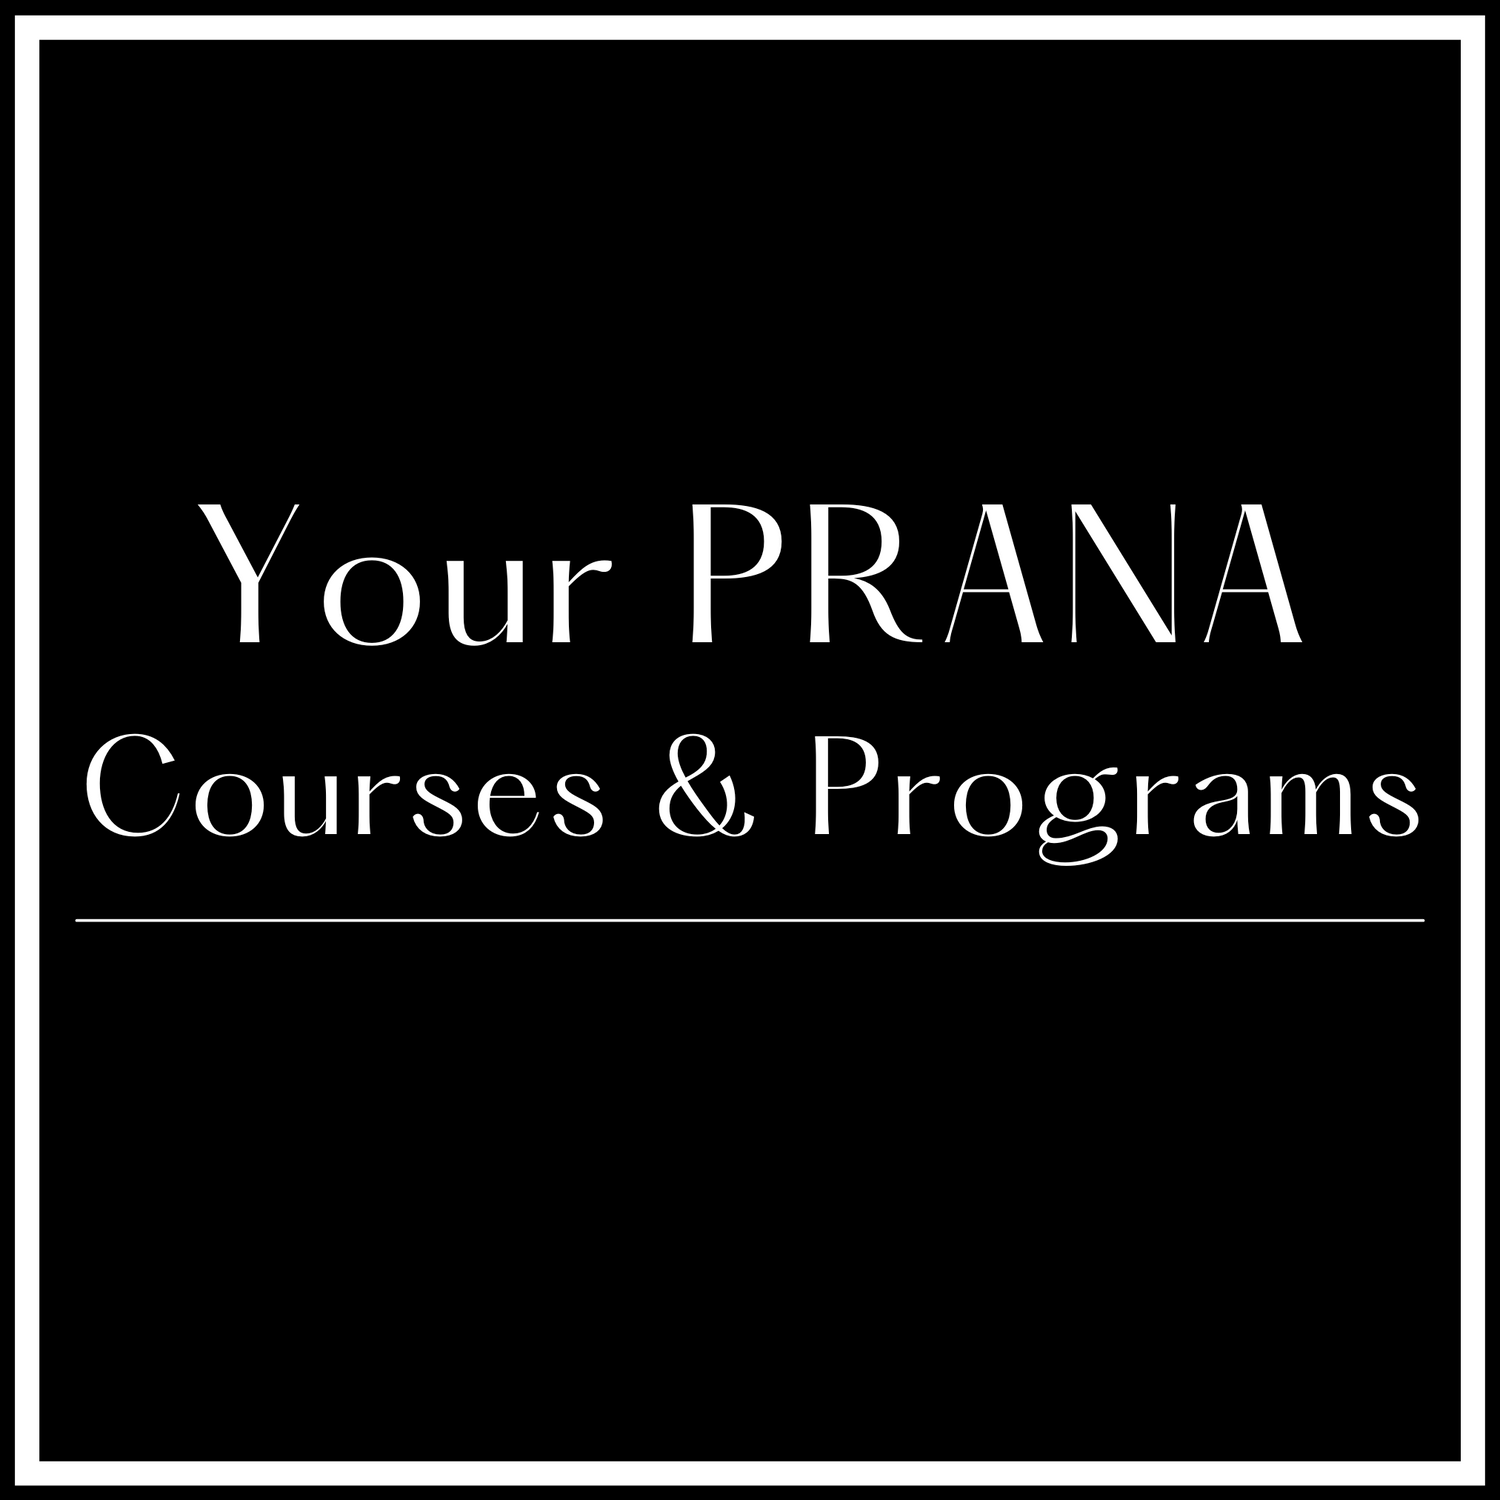 Your PRANA Courses & Programs